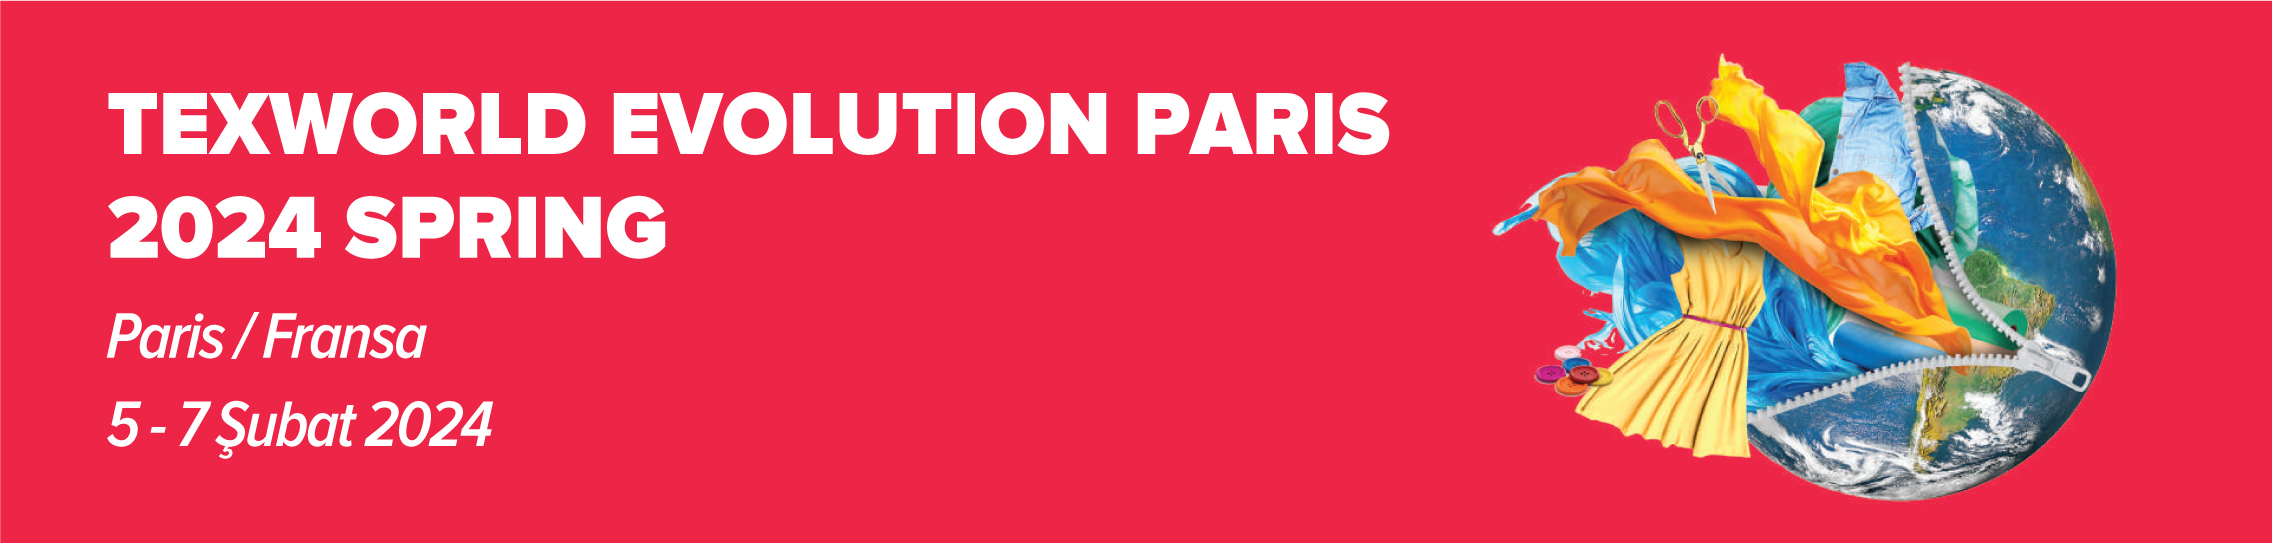 TEXWORLD EVOLUTION PARIS SPRING 2024